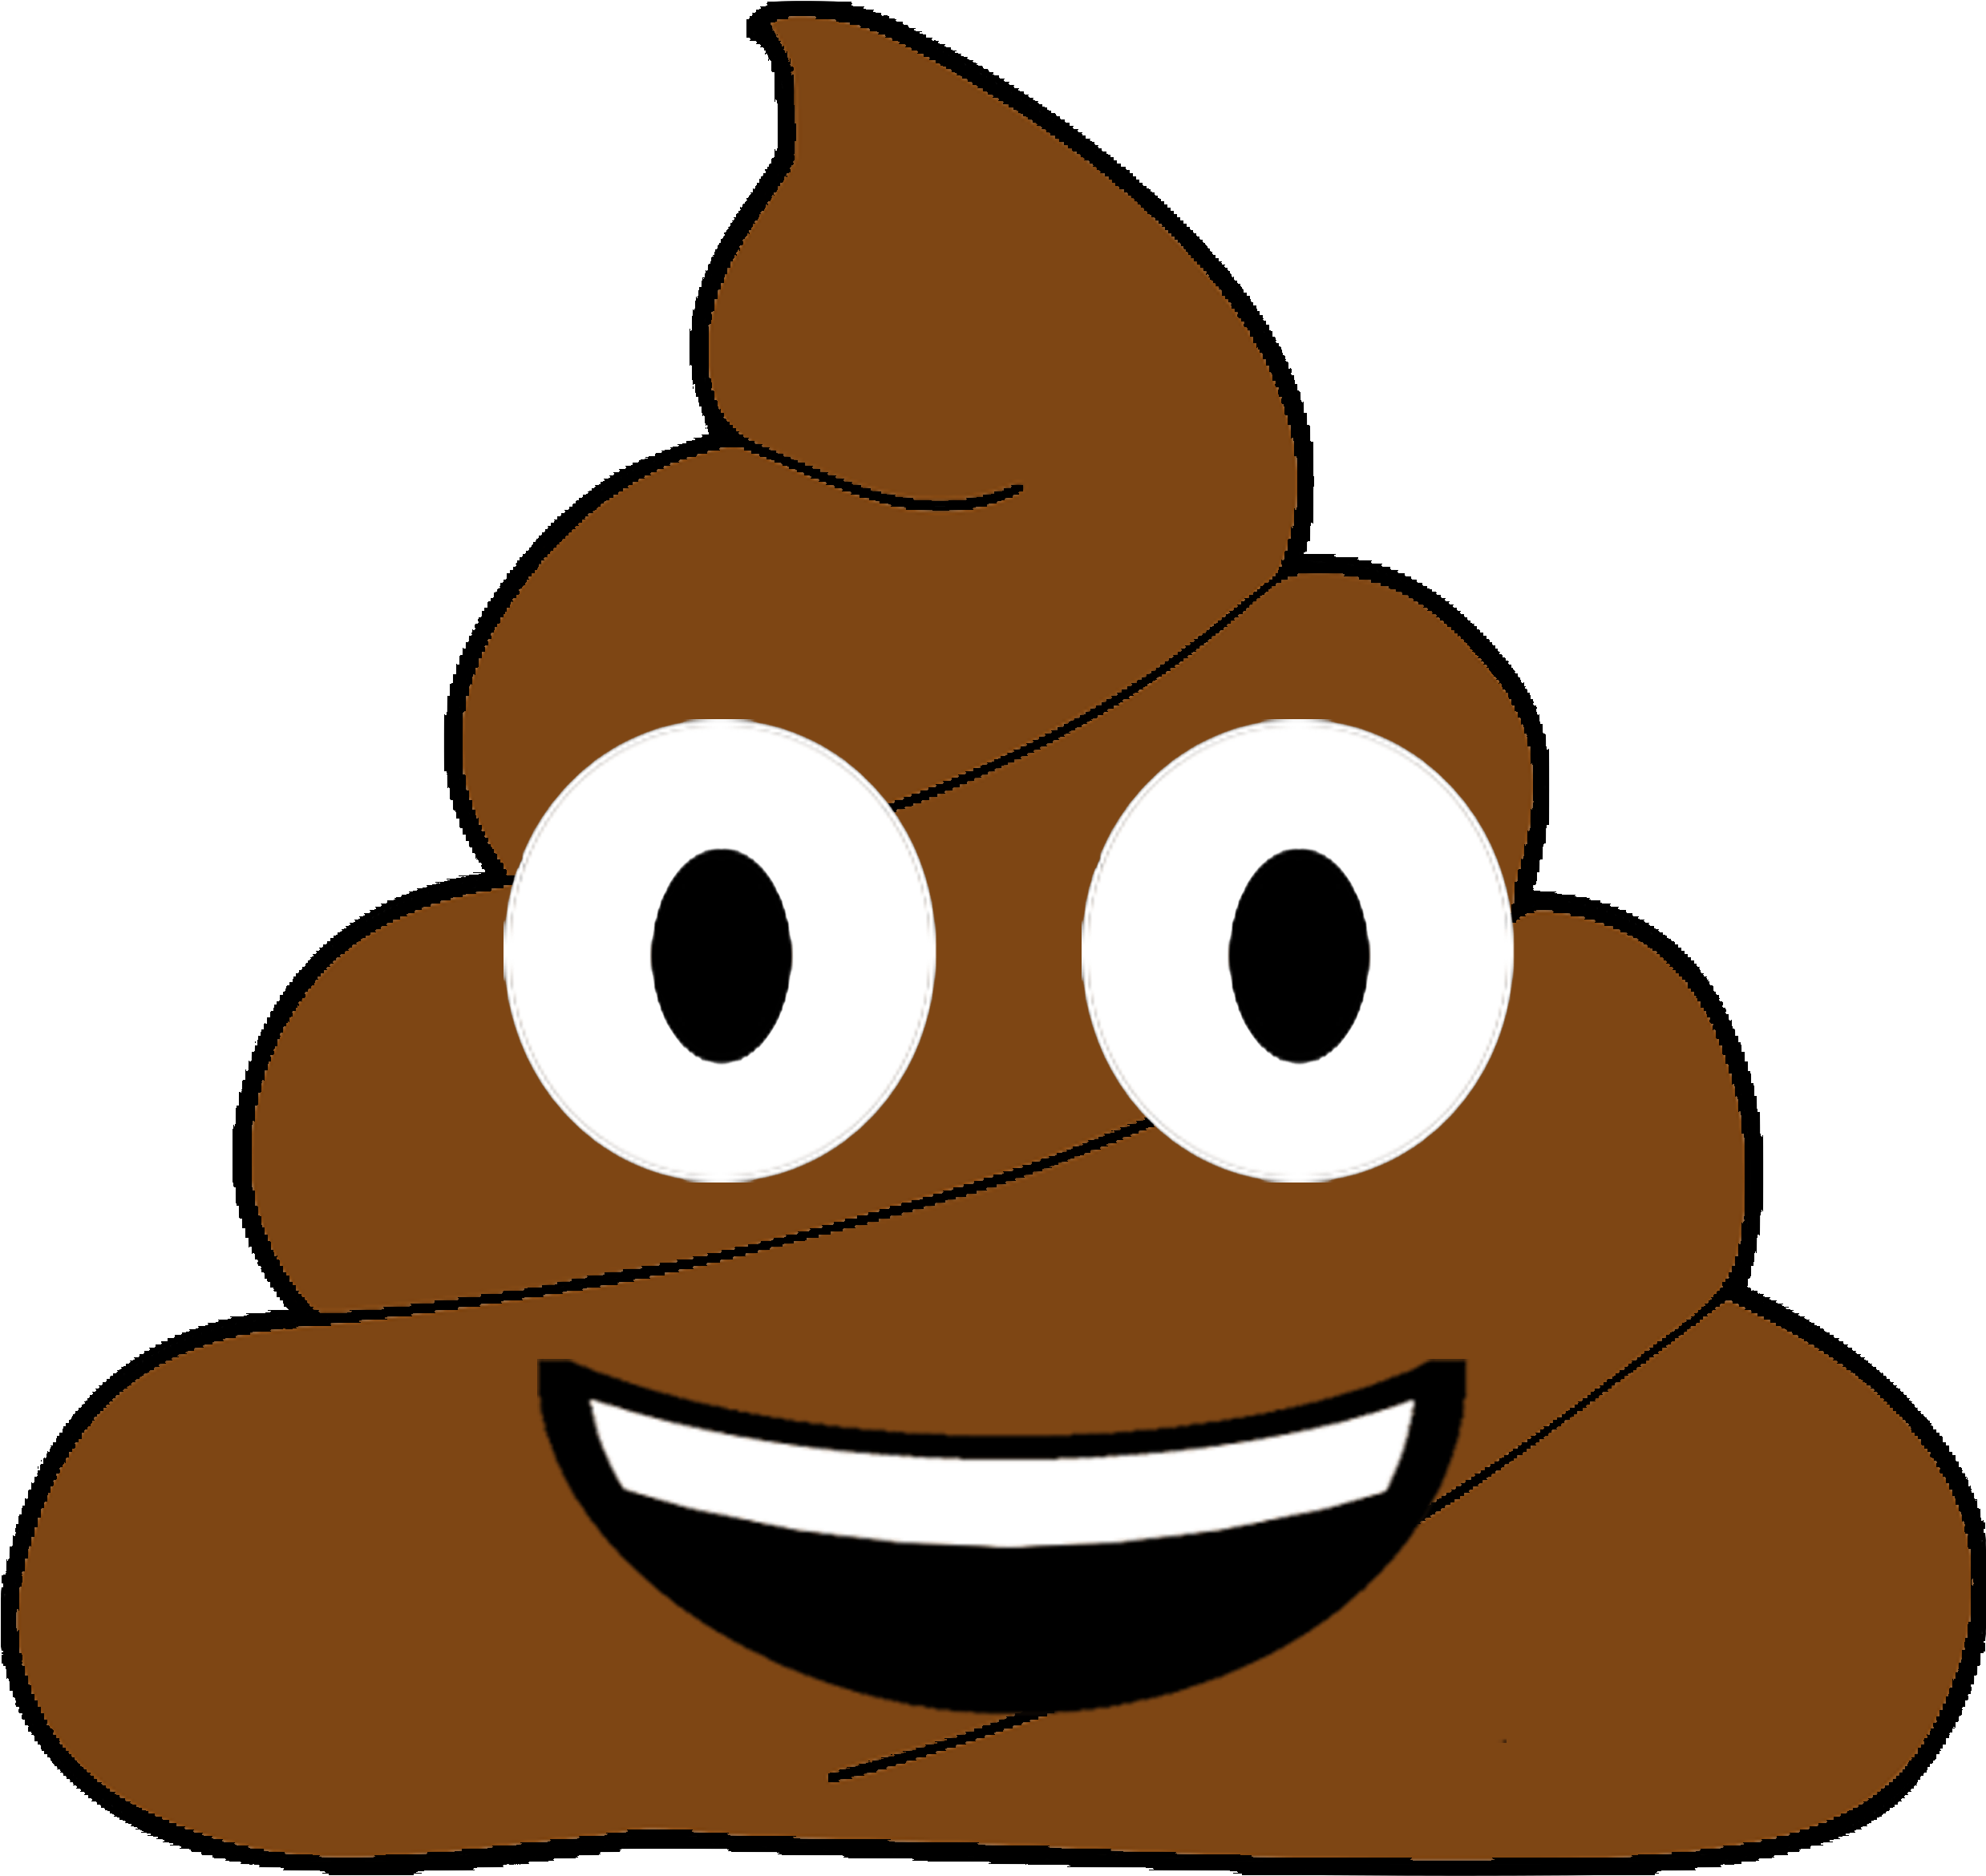 Poop PNG Background Image